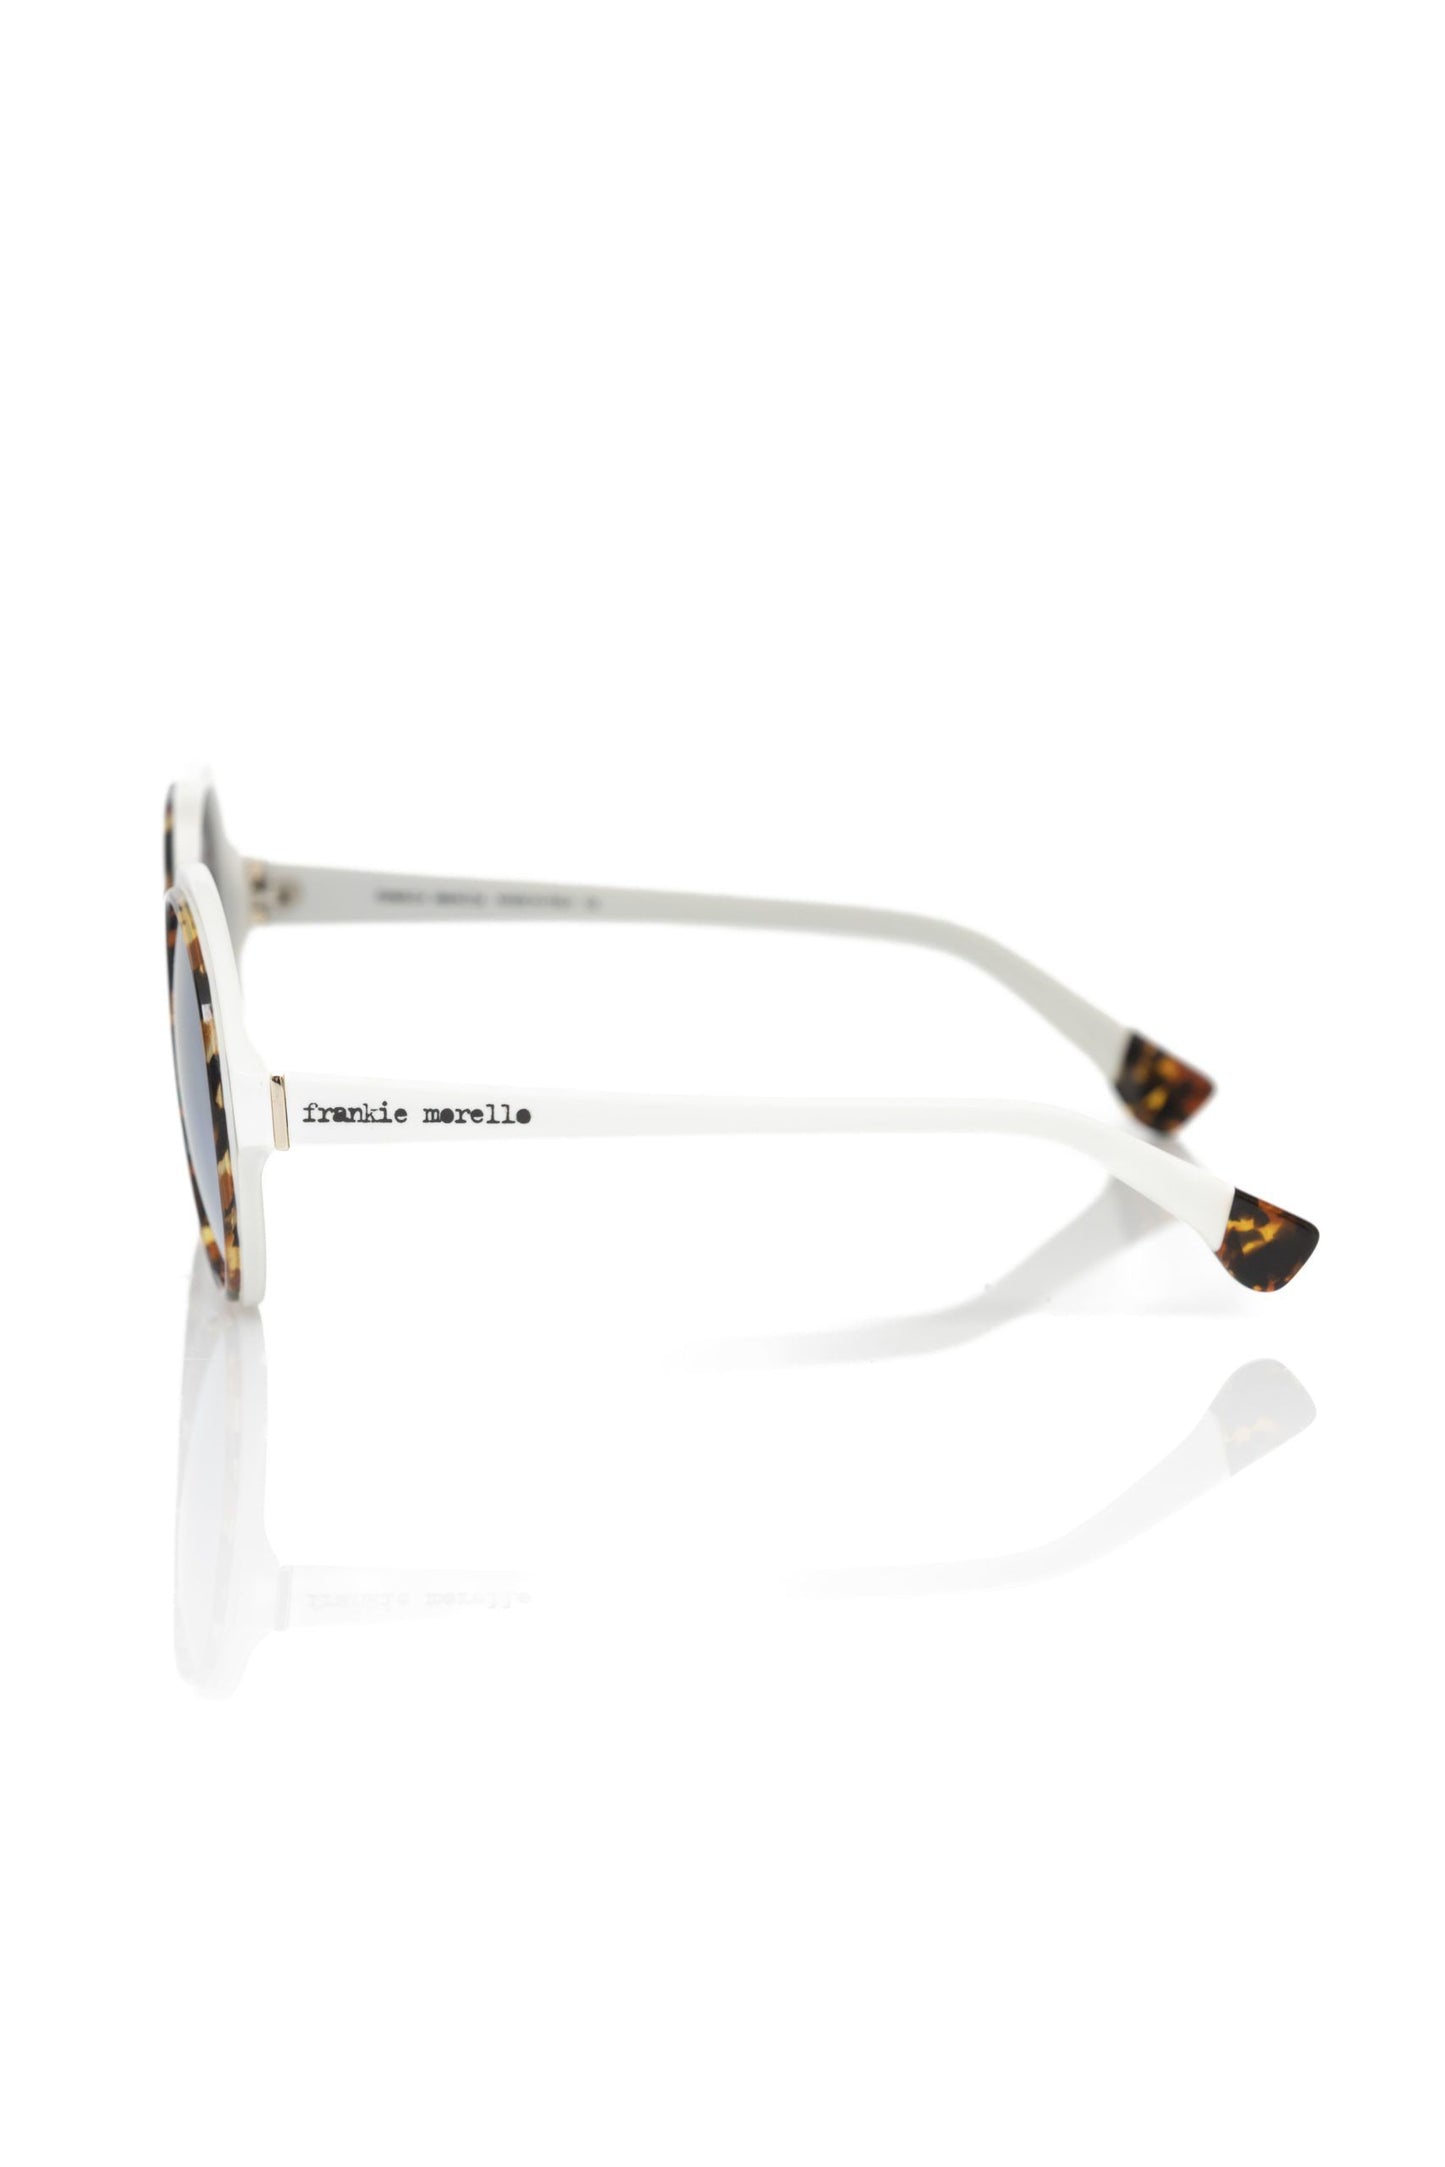 Frankie Morello FRMO-22074 White Acetate Sunglasses